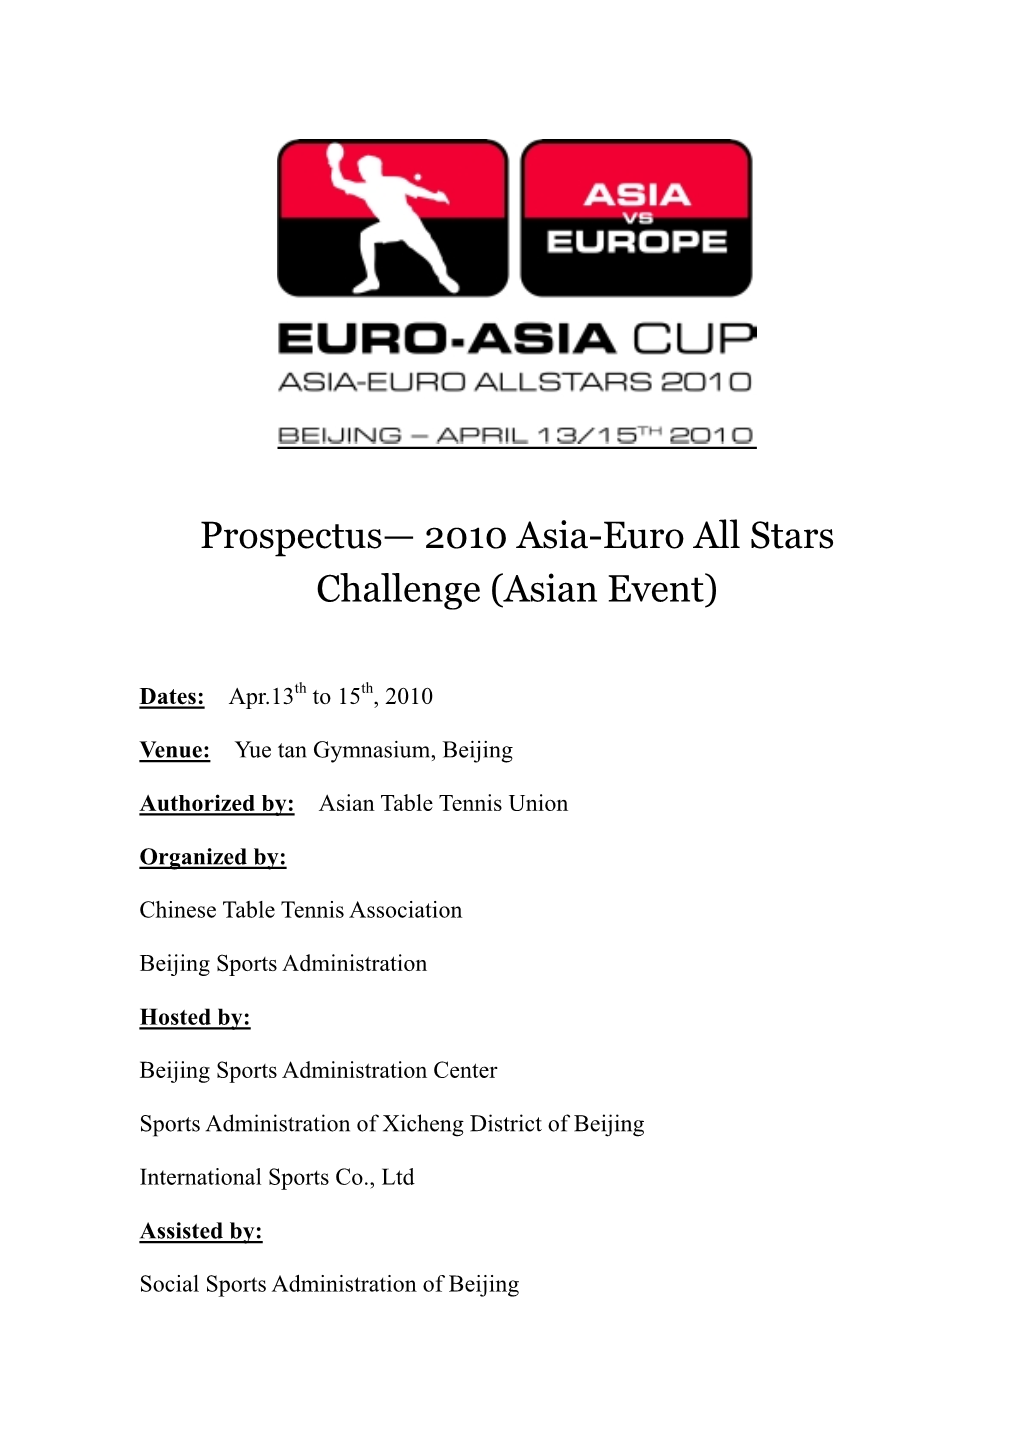 Prospectus— 2010 Asia-Euro All Stars Challenge (Asian Event)